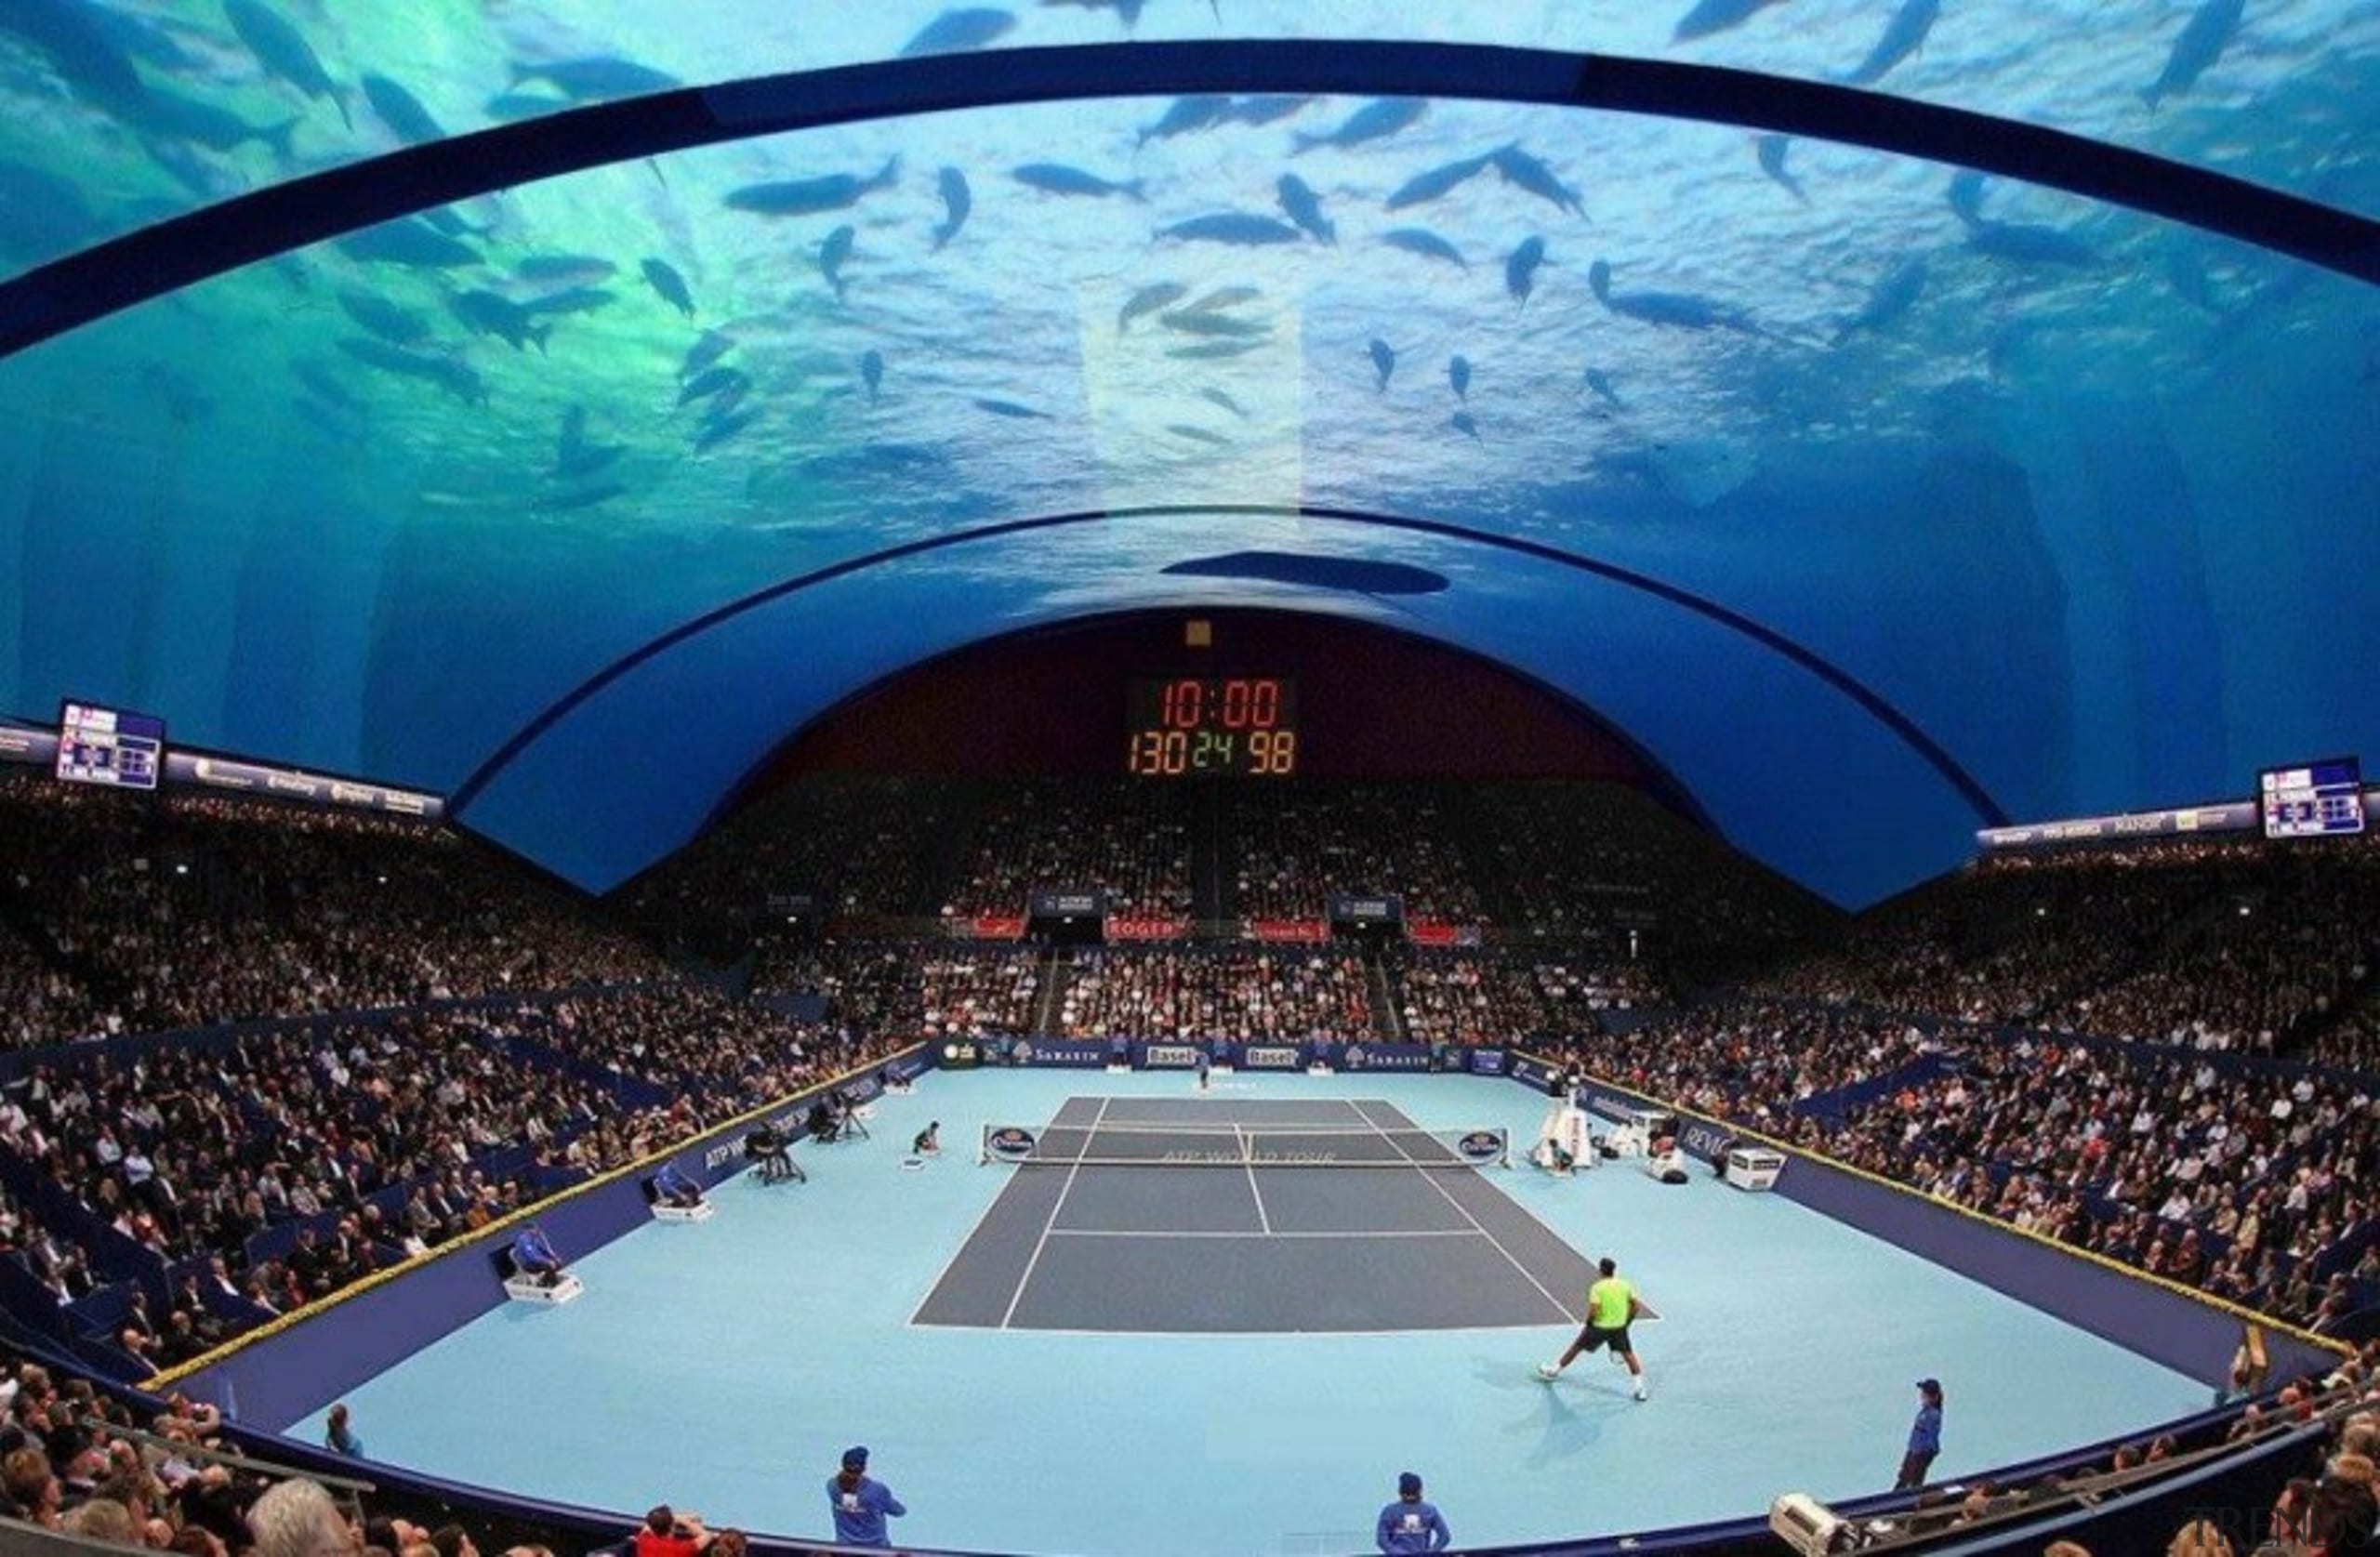 World's First Underwater Tennis Complex 03 - World's arena, leisure, sky, sport venue, structure, theatre, world, teal, blue